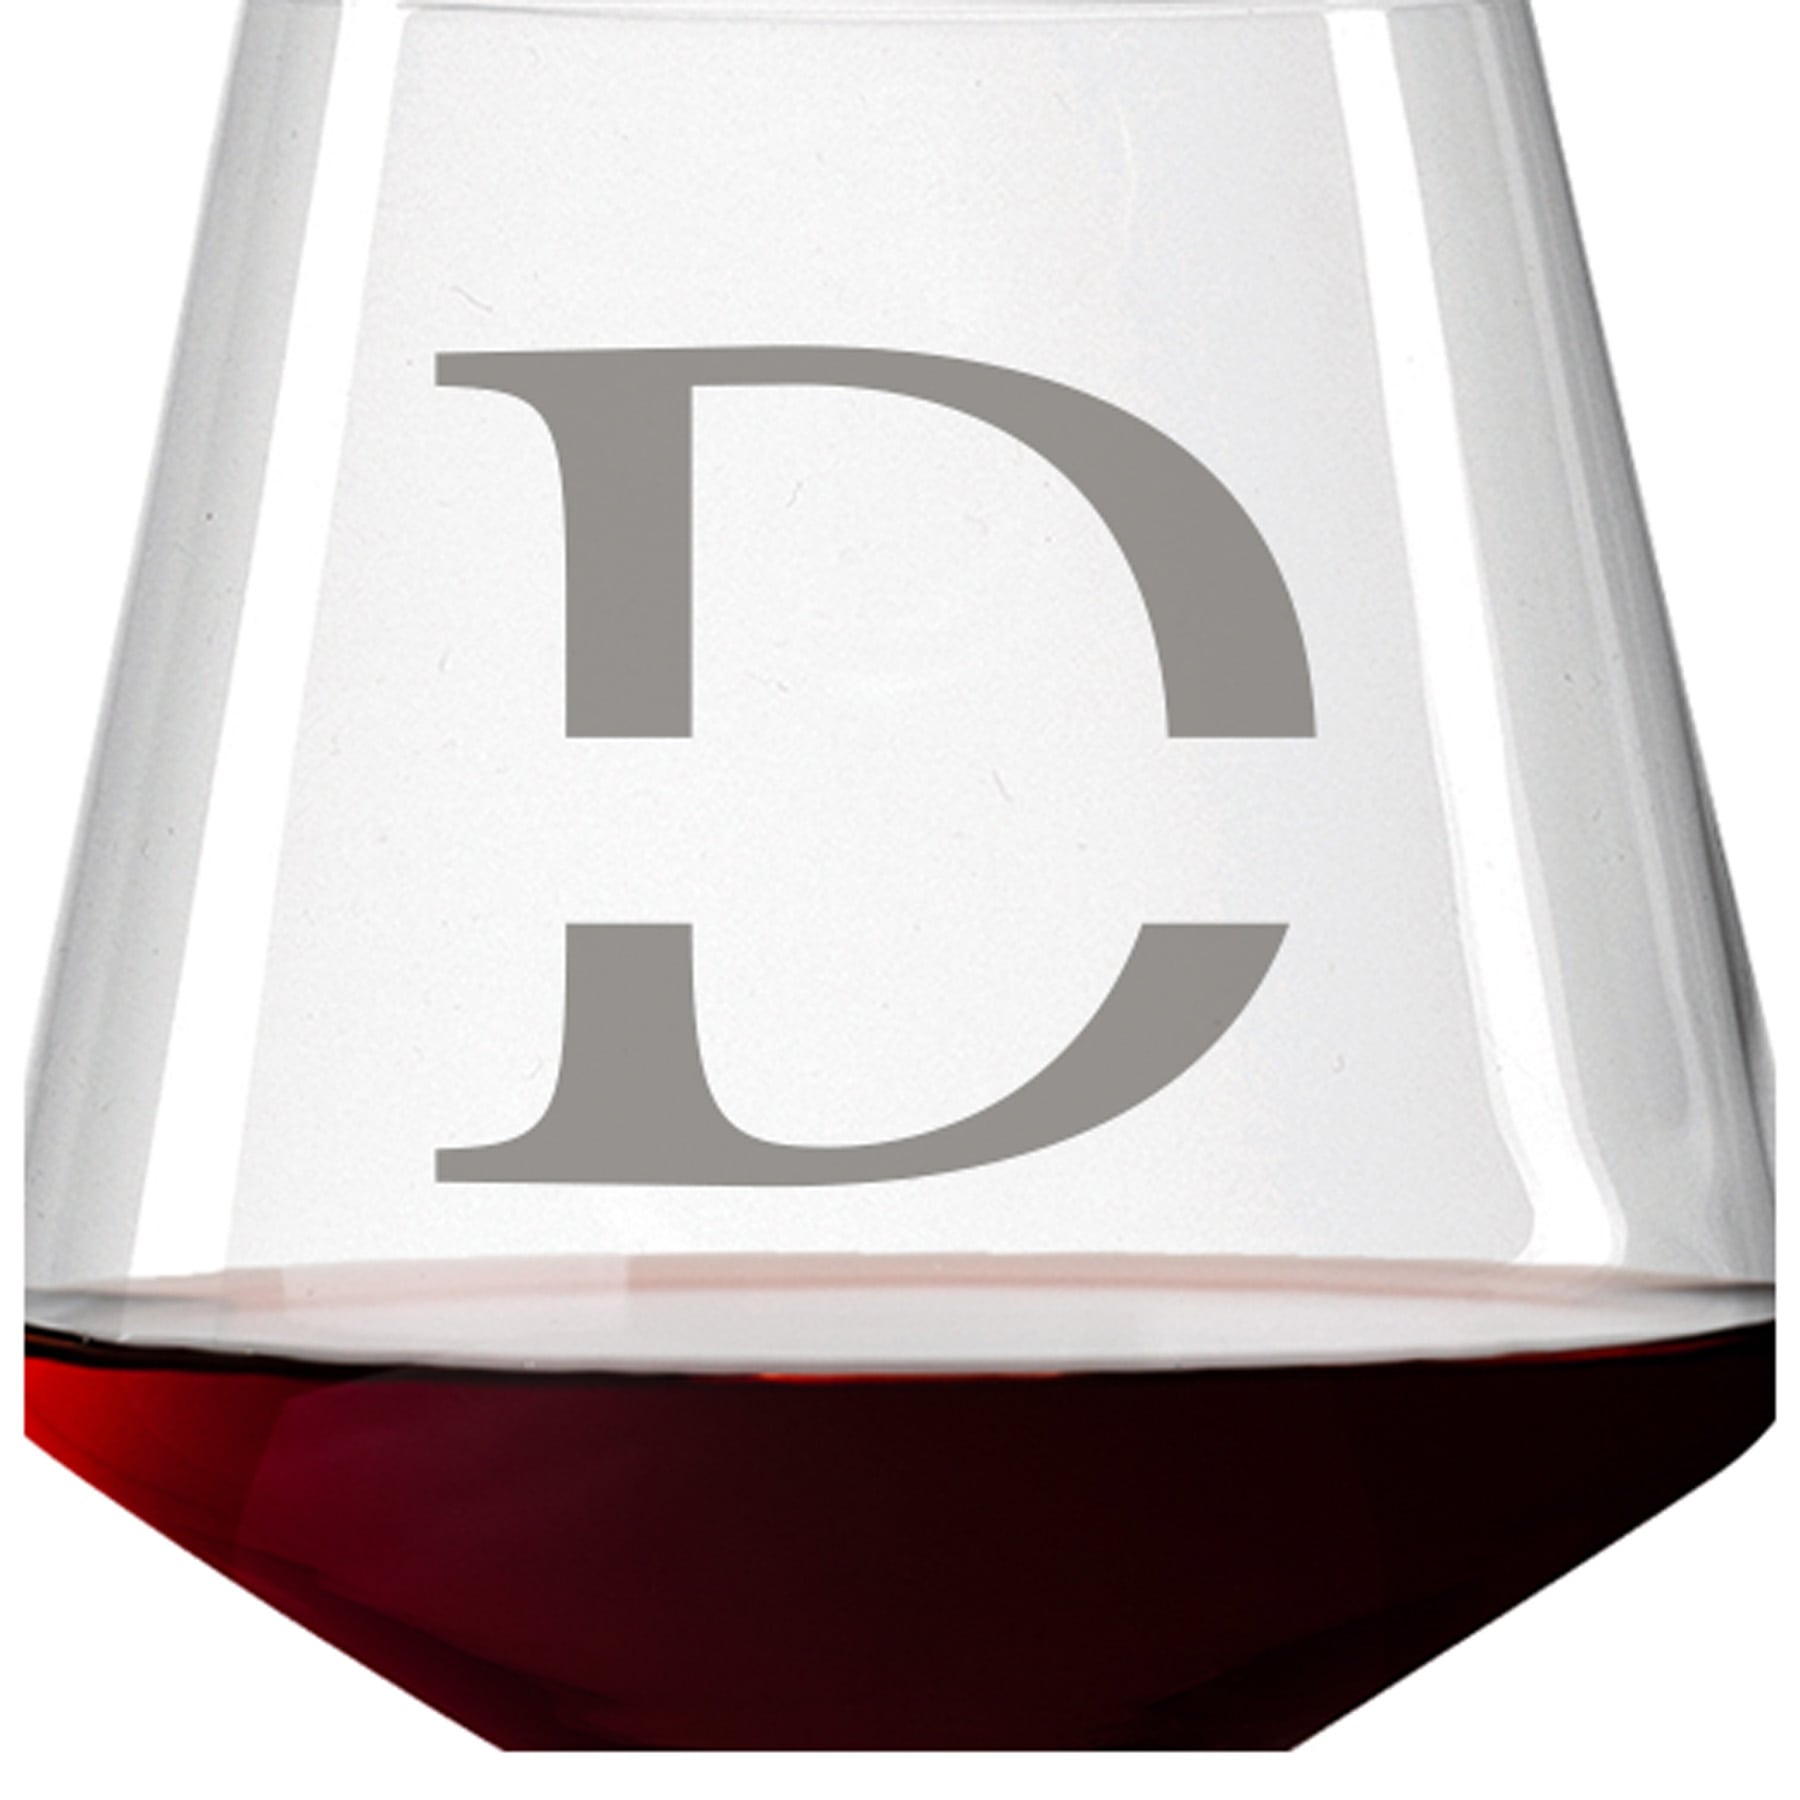 Leonardo Burgunderglas Rotweinglas PUCCINI 730ml mit Namen oder Wunschtext graviert (Initialen)